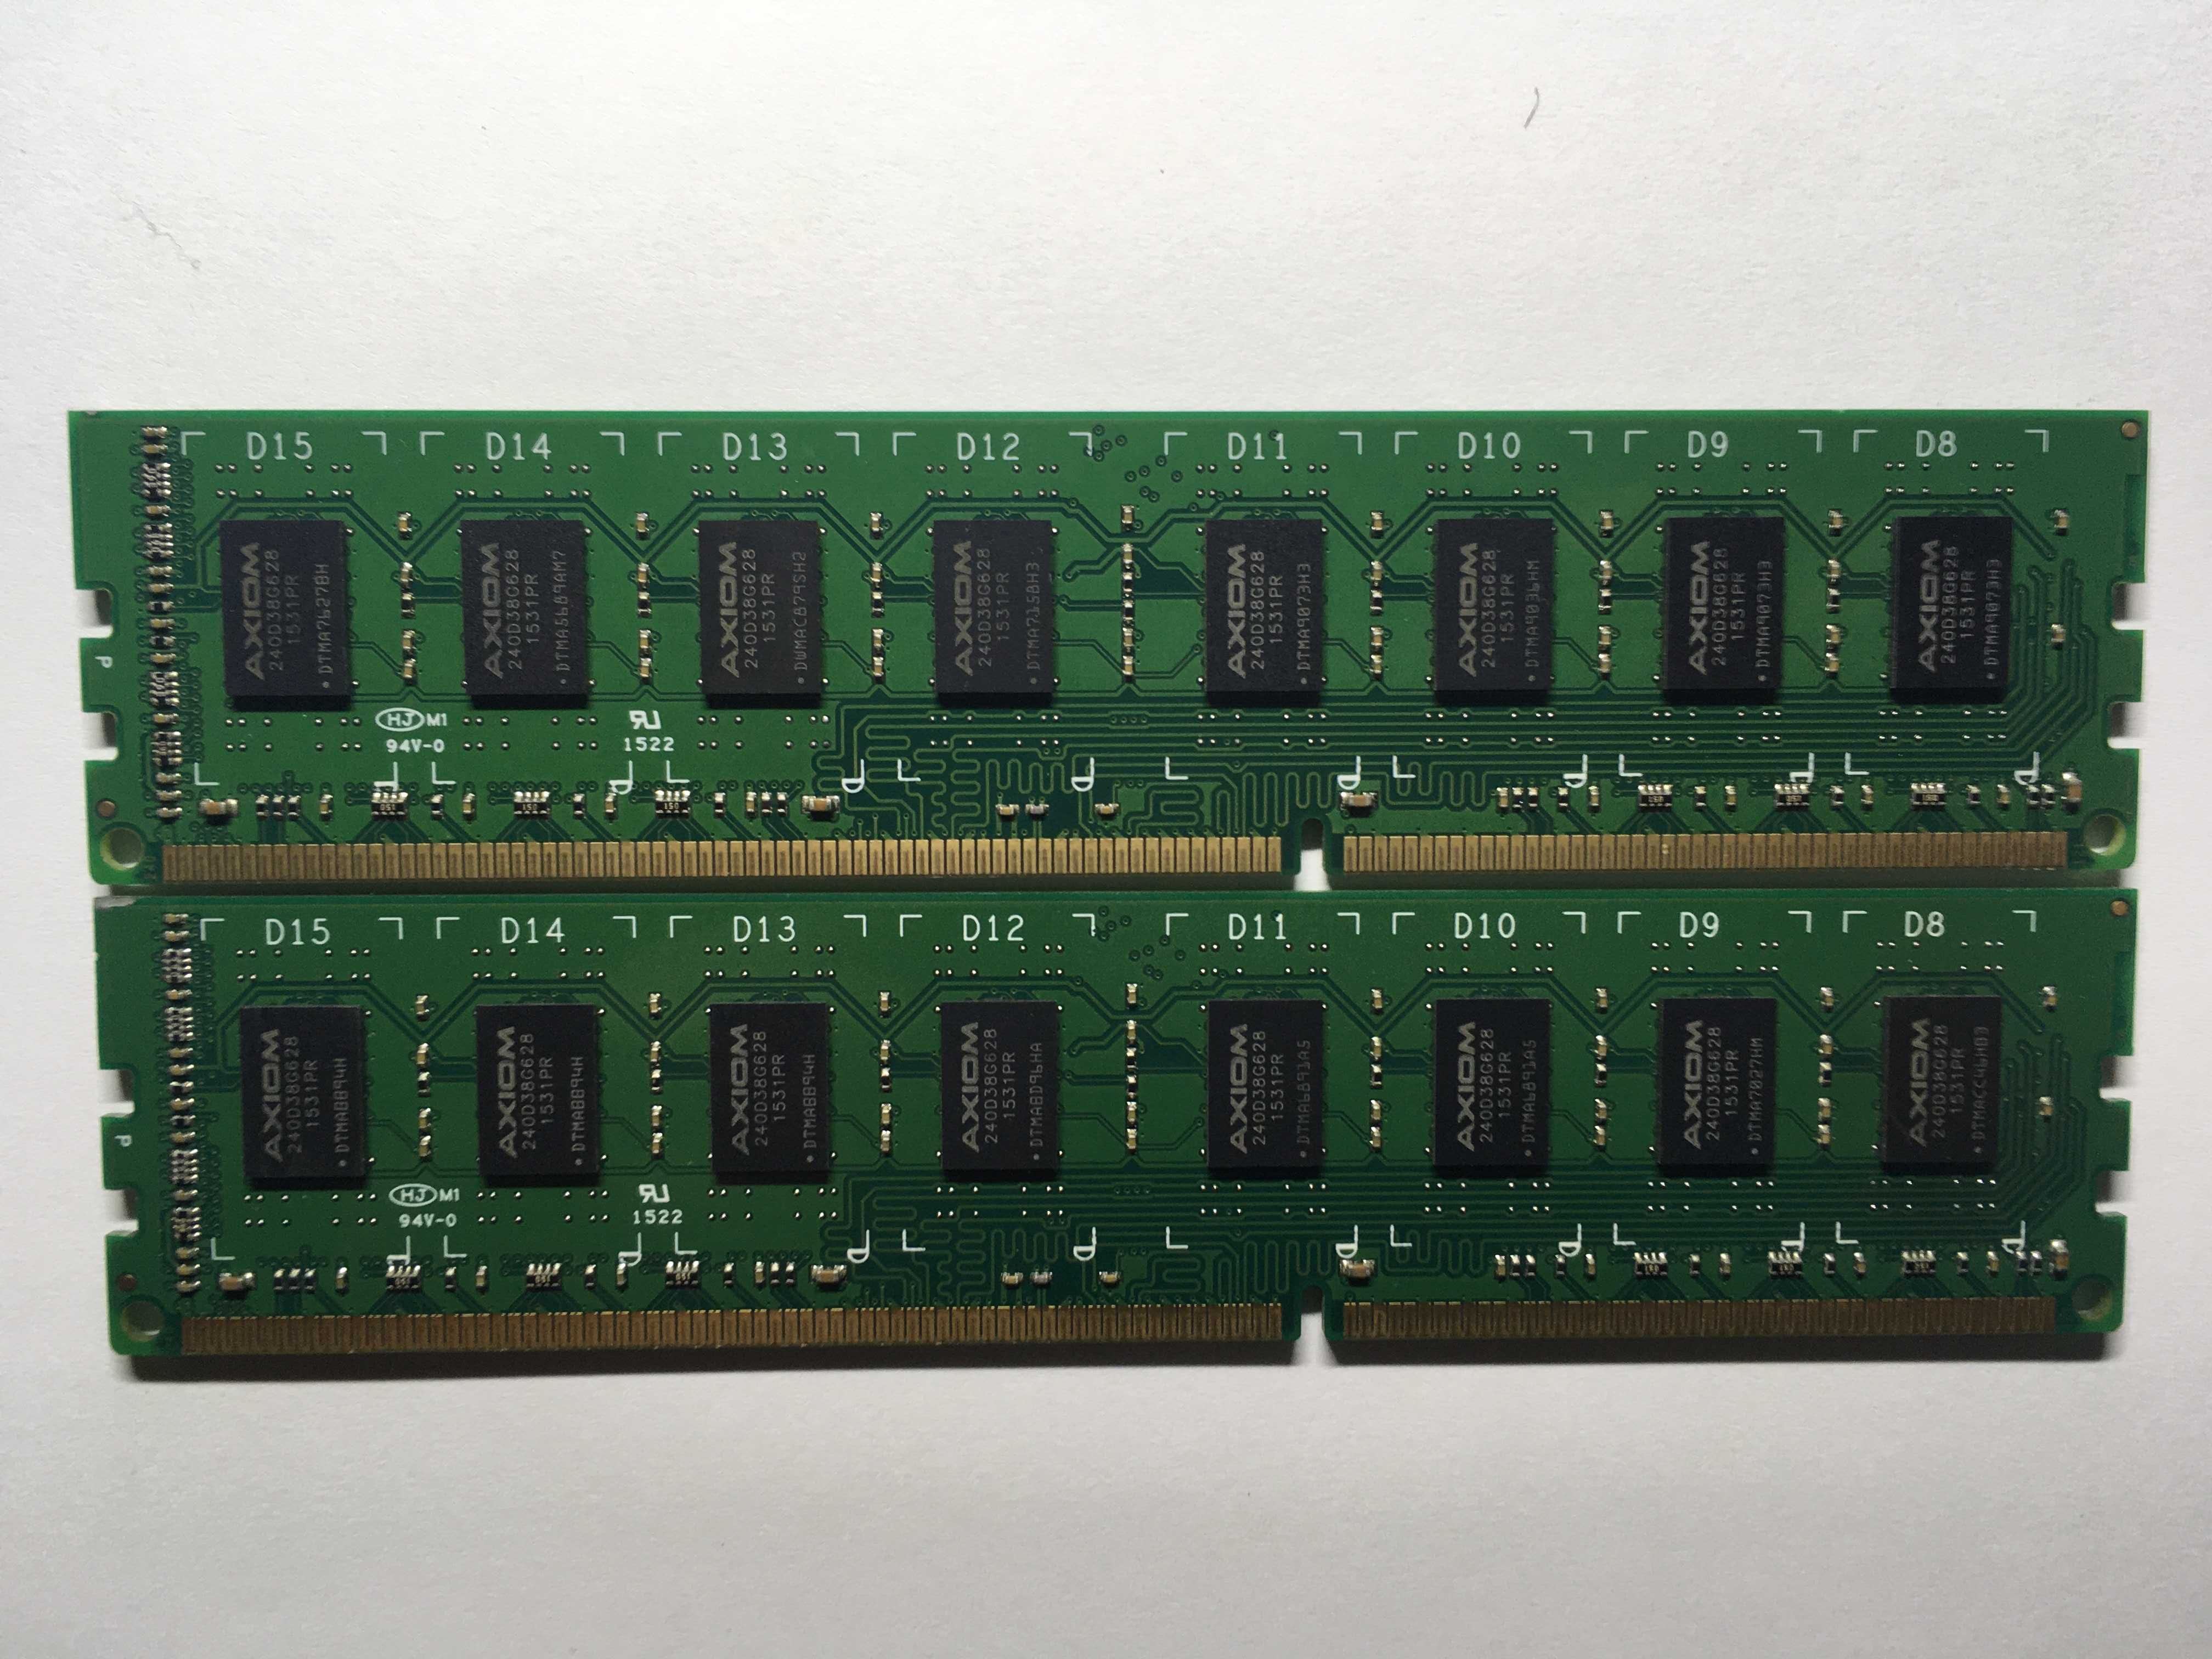 Память 8gb DDR3 1800 NON-ECC є 2 штуки (пара)